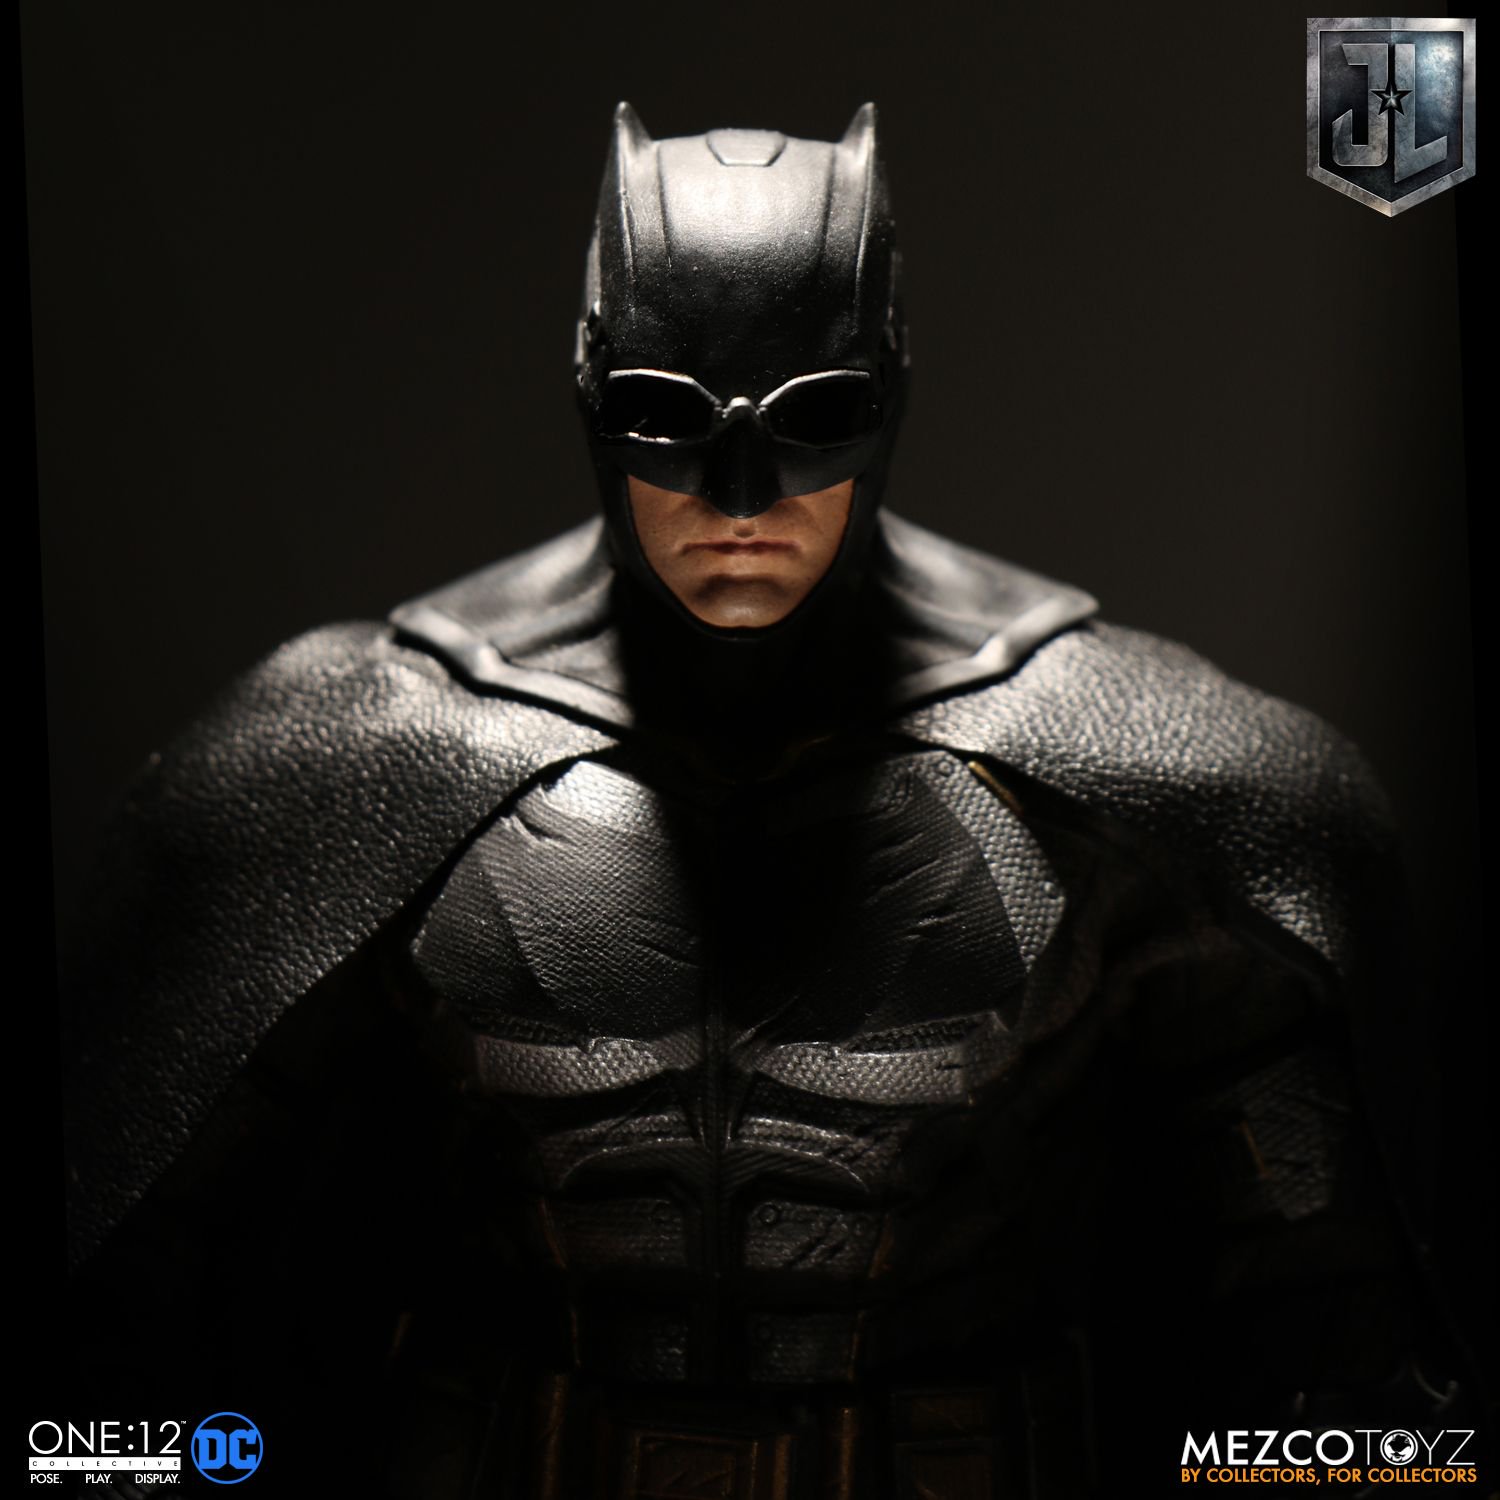 MEZCO ONE:12 Tactical Suit Batman Ben Affleck JUSTICE LEAGUE PRIORITY SHIPPING! 